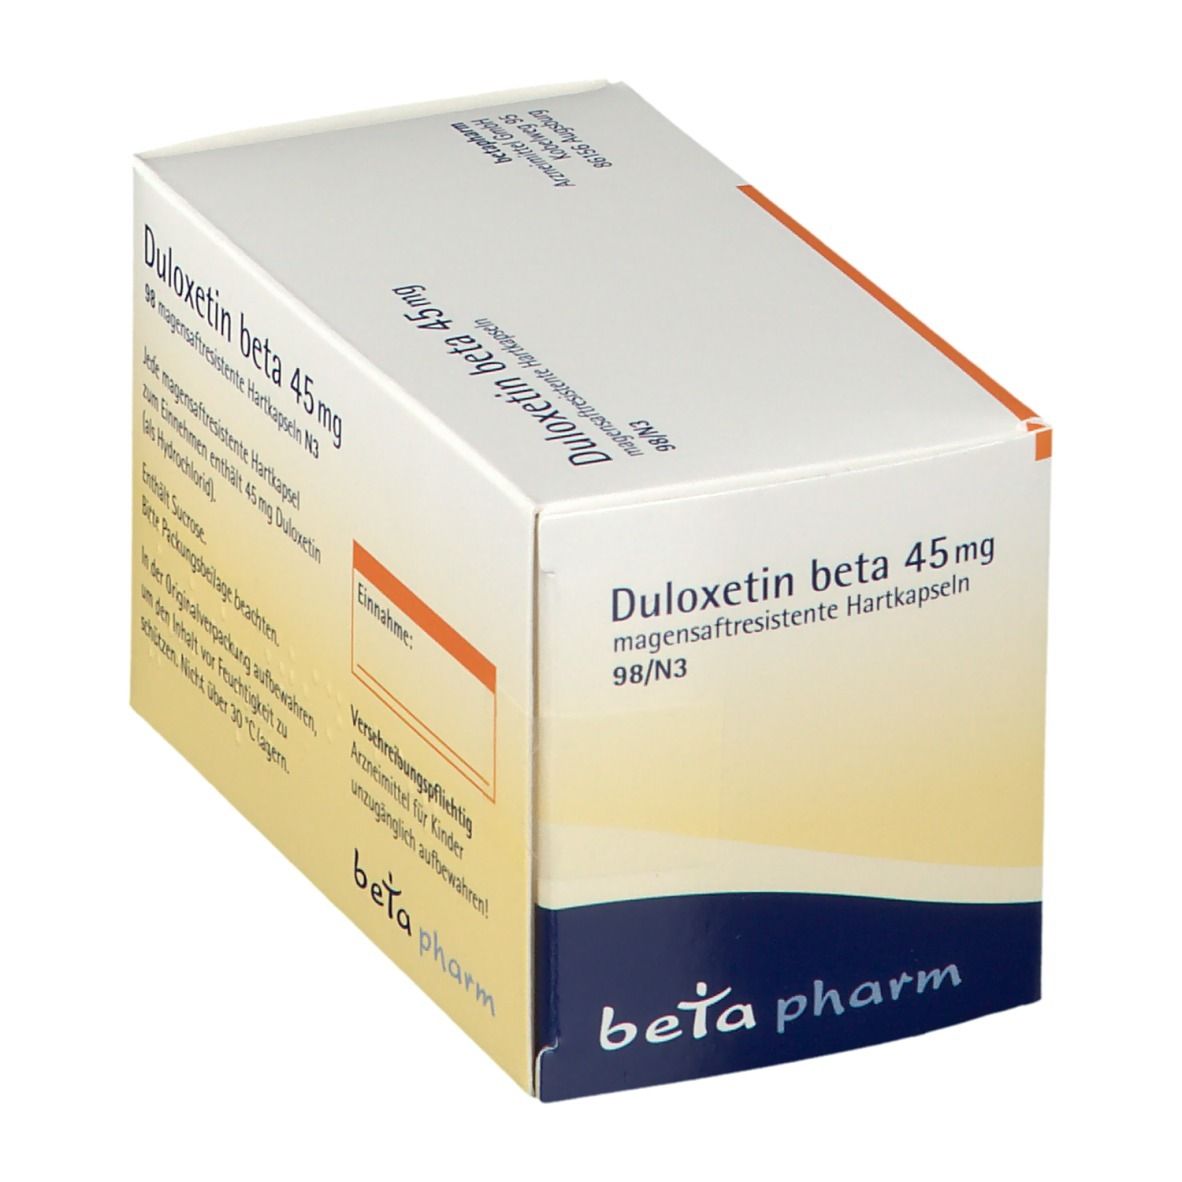 Duloxetin beta 45 mg